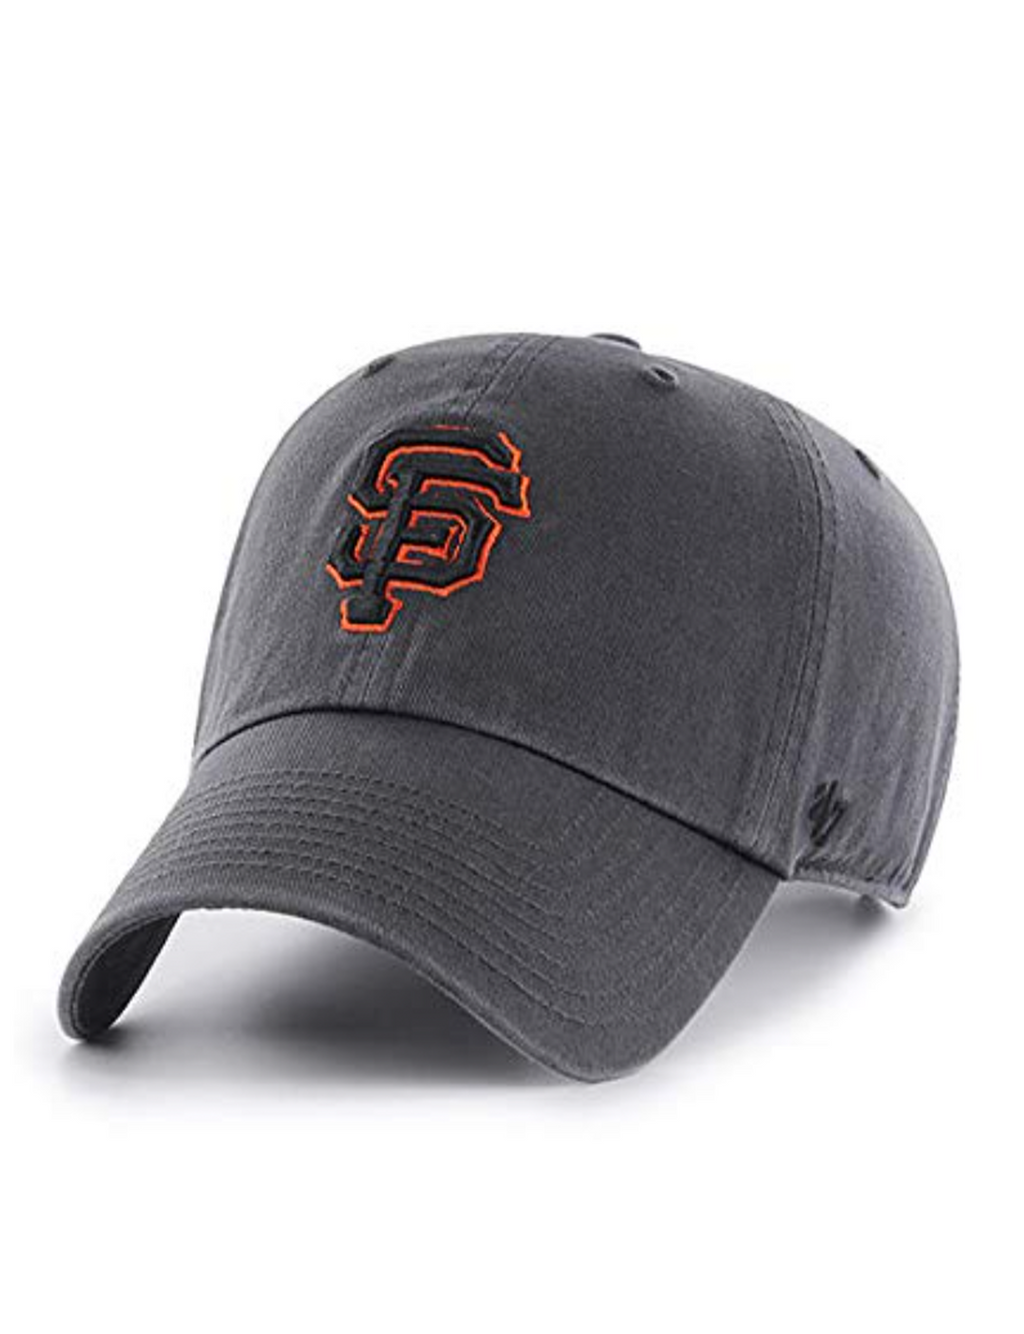 SF Giants Basic Ball Cap, Charcoal/Black